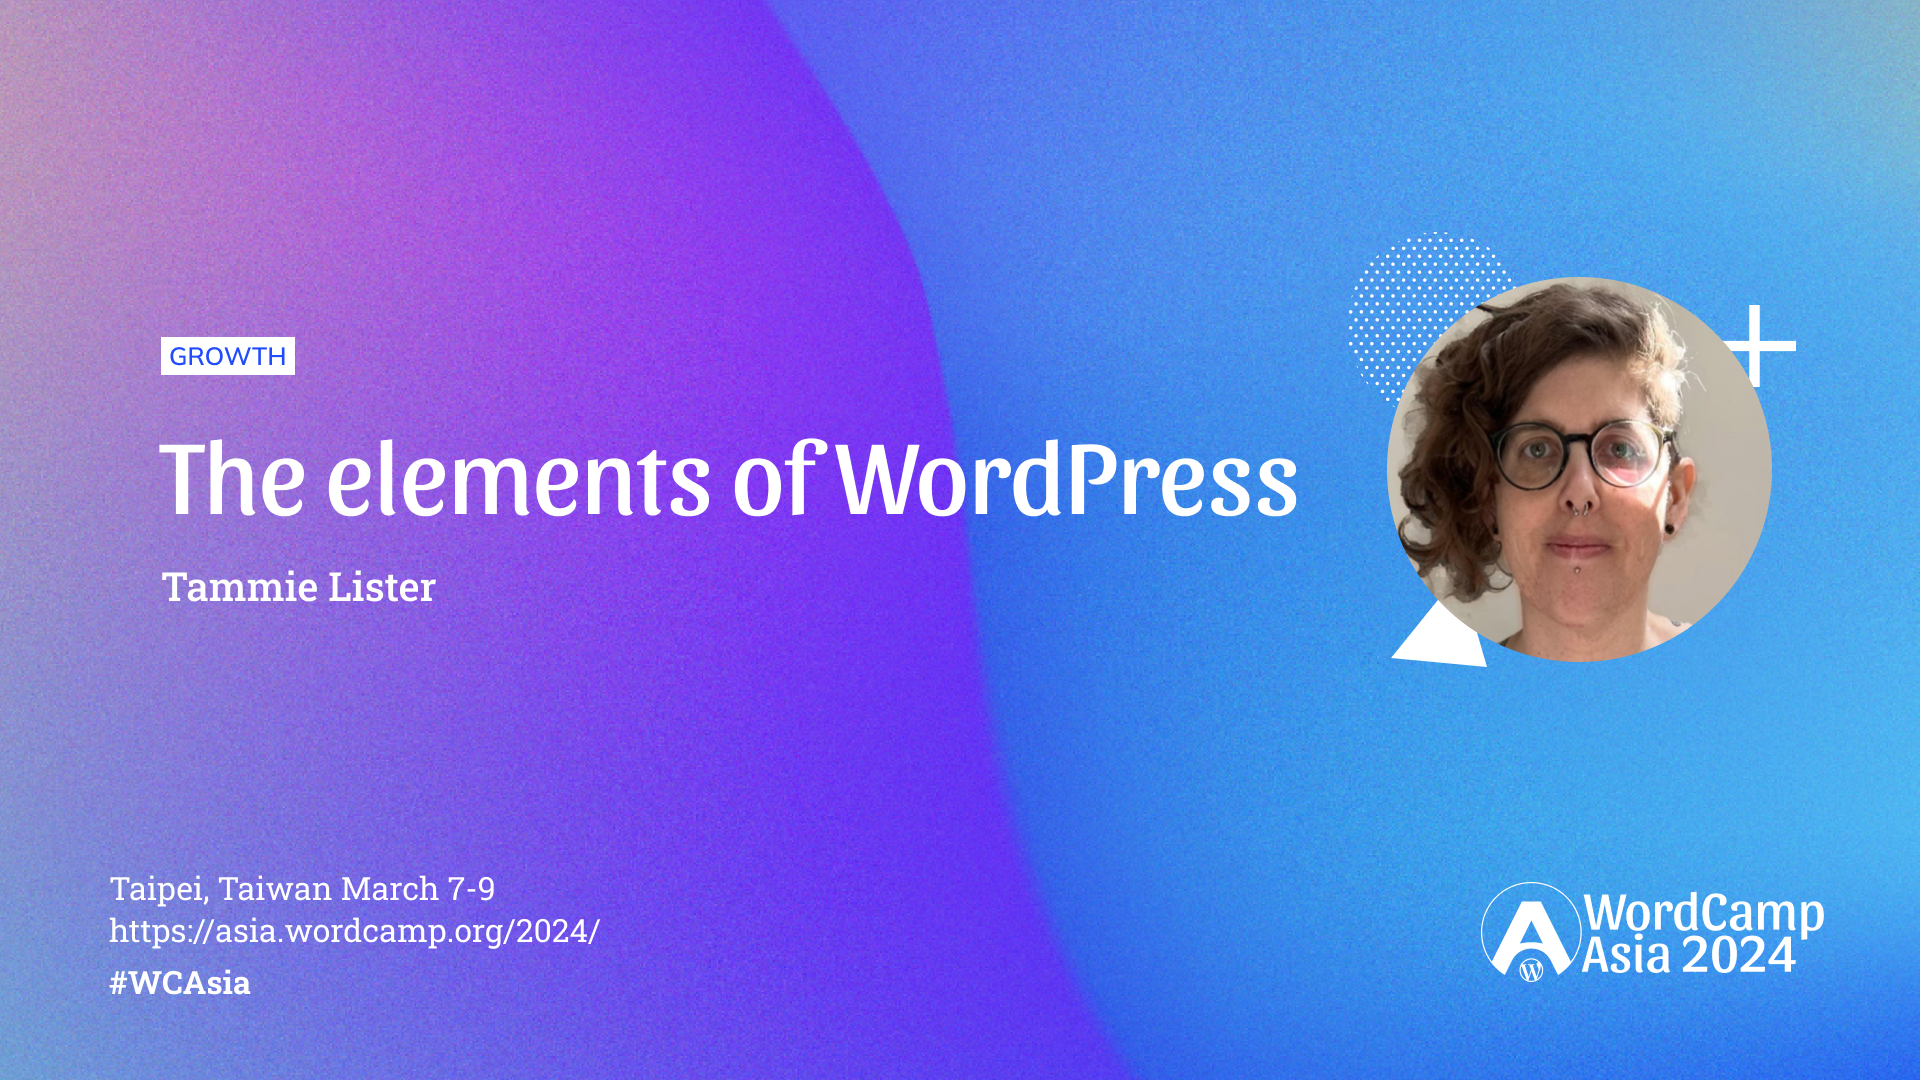 The elements of WordPress